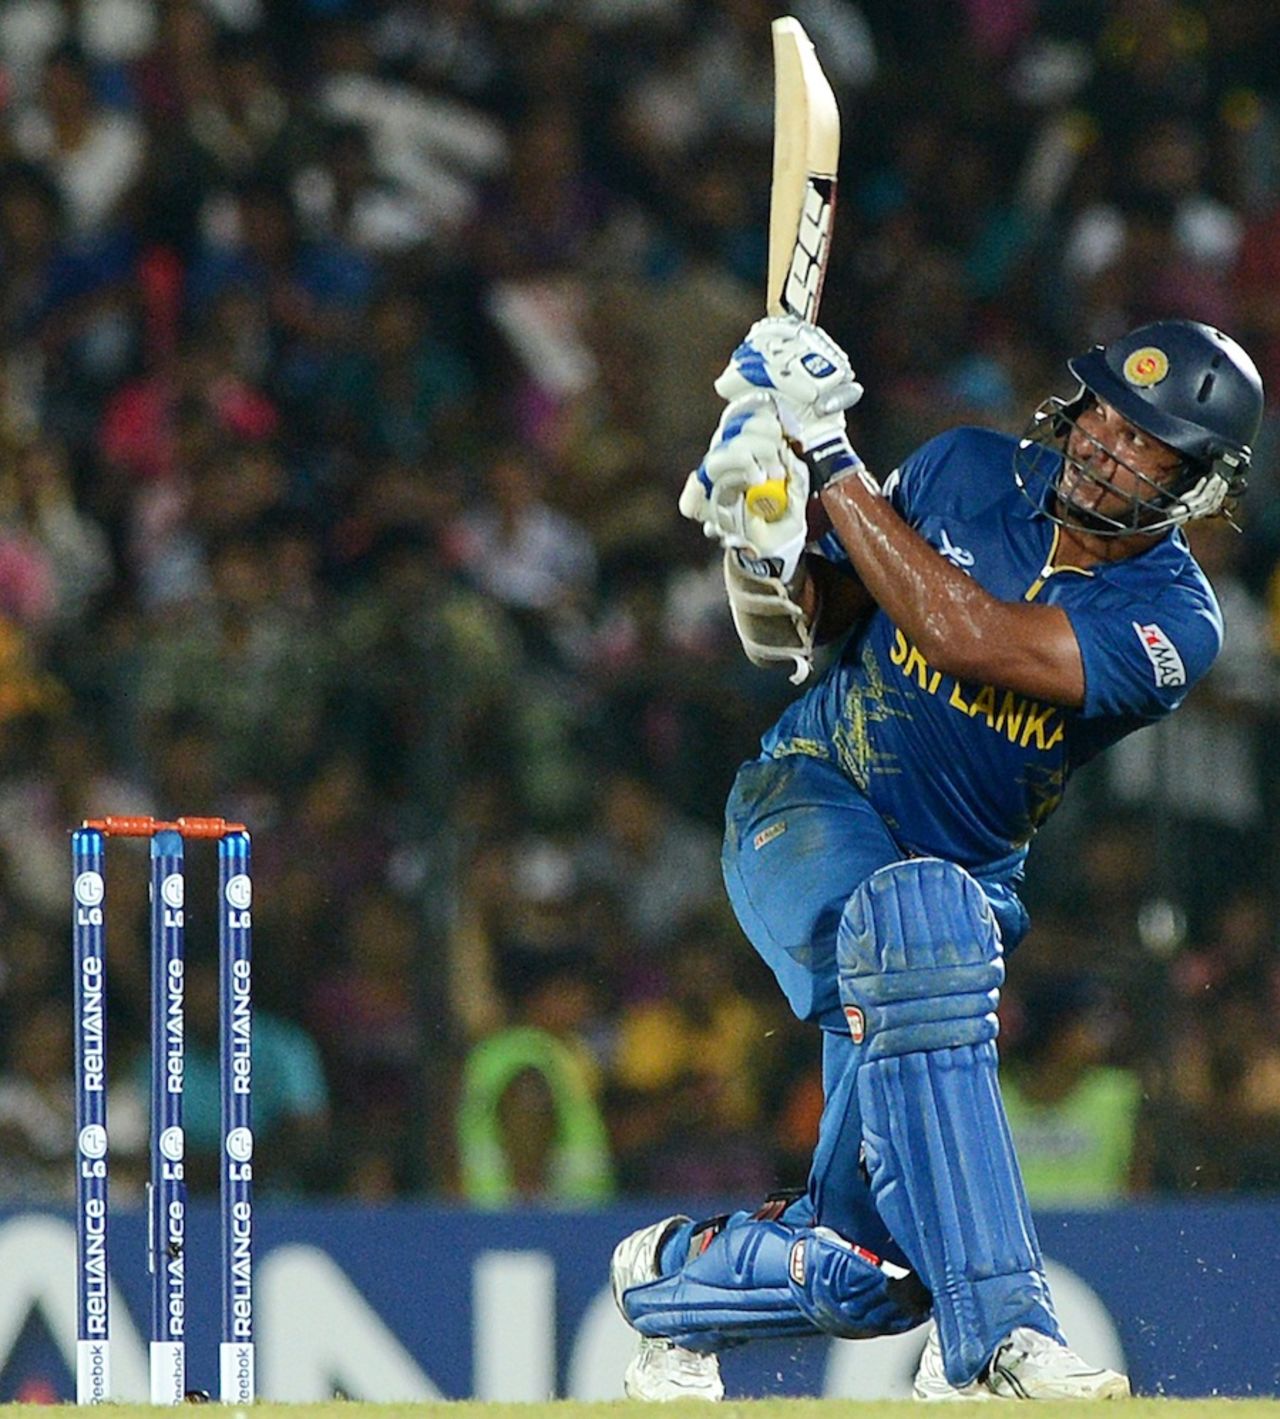 Kumar Sangakkara slog-sweeps a ball, Sri Lanka v Zimbabwe, Group C, World T20 2012, Hambantota, September 18, 2012